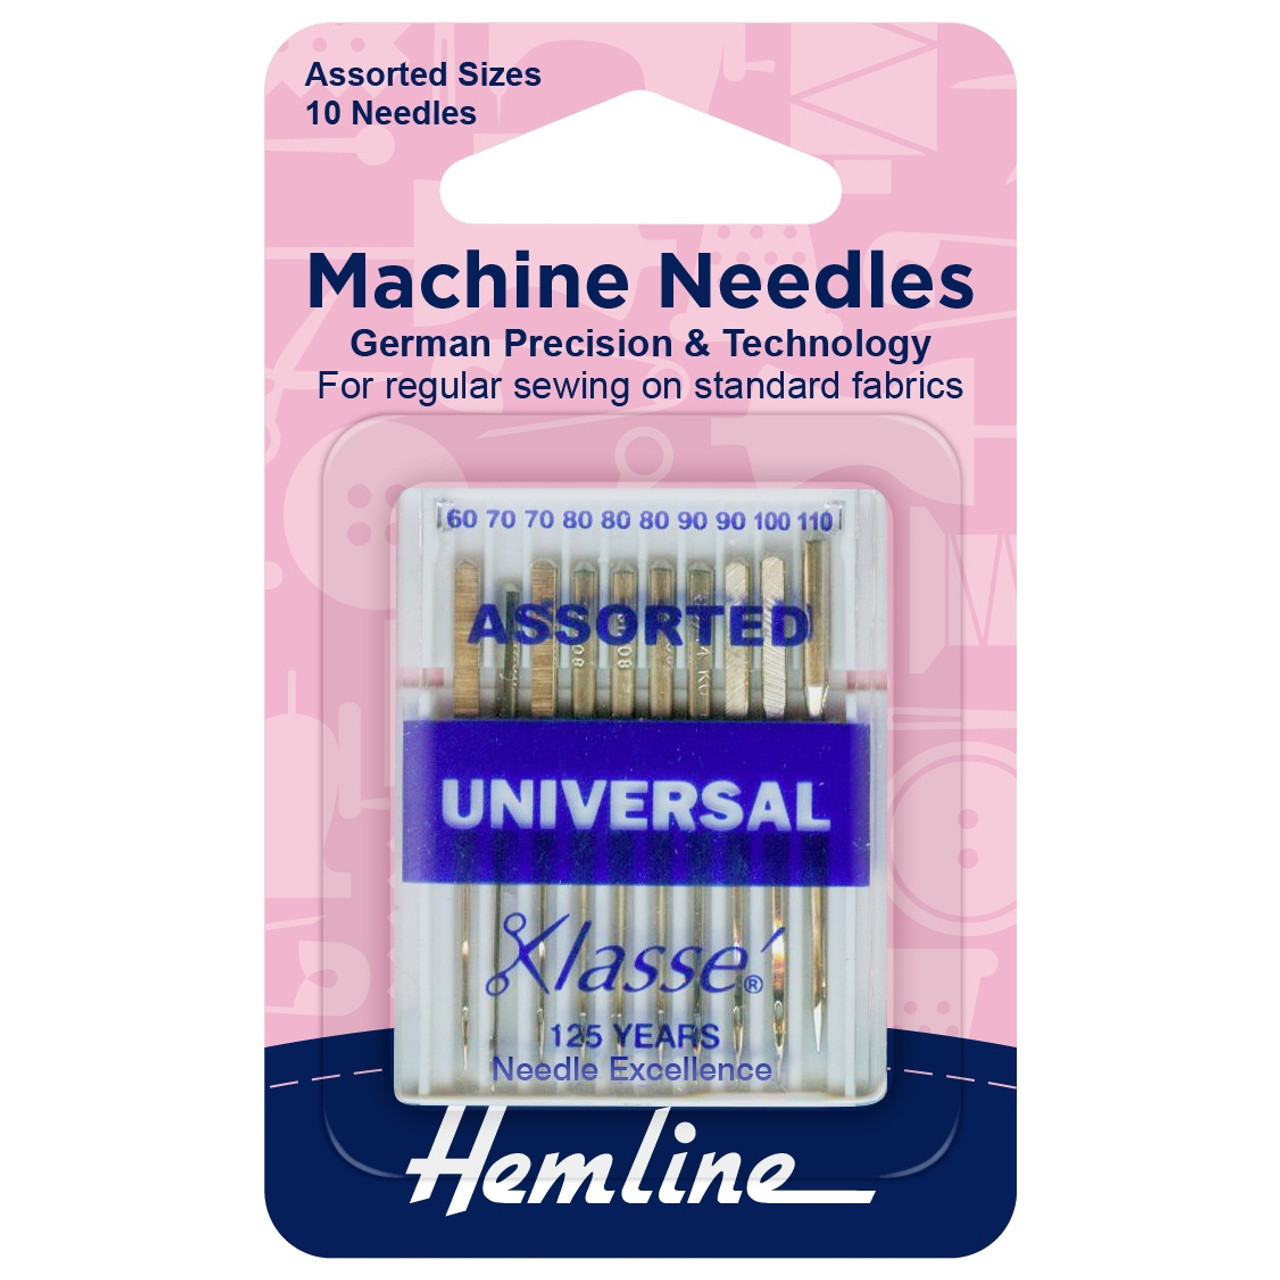 Machine Needles - Universal - Assorted Sizes 60 - 110 (10 needles)